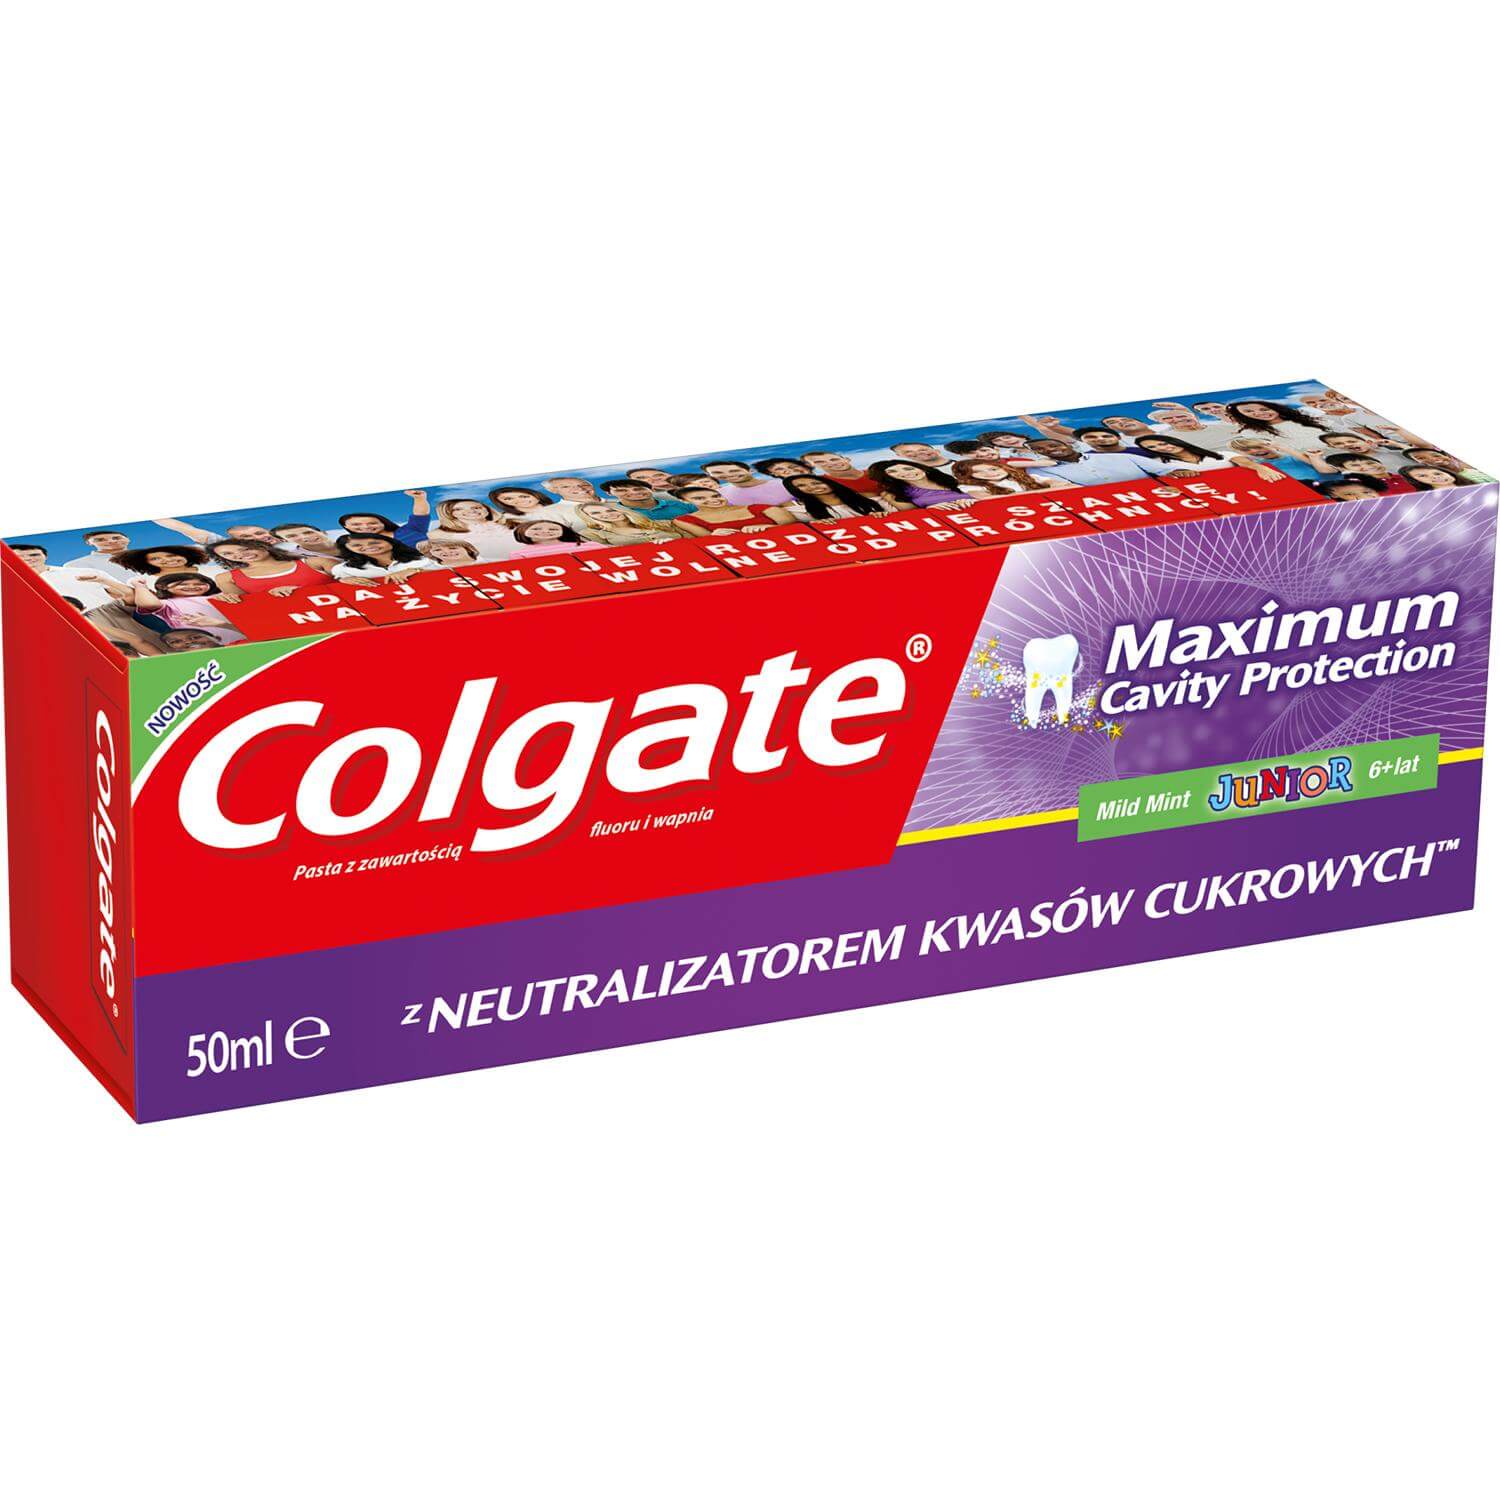 Colgate Maximum Cavity Protection Junior Παρέχει Στα Δόντια Τη Μέγιστη Προστασία Από Την Τερηδόνα 50ml 9120